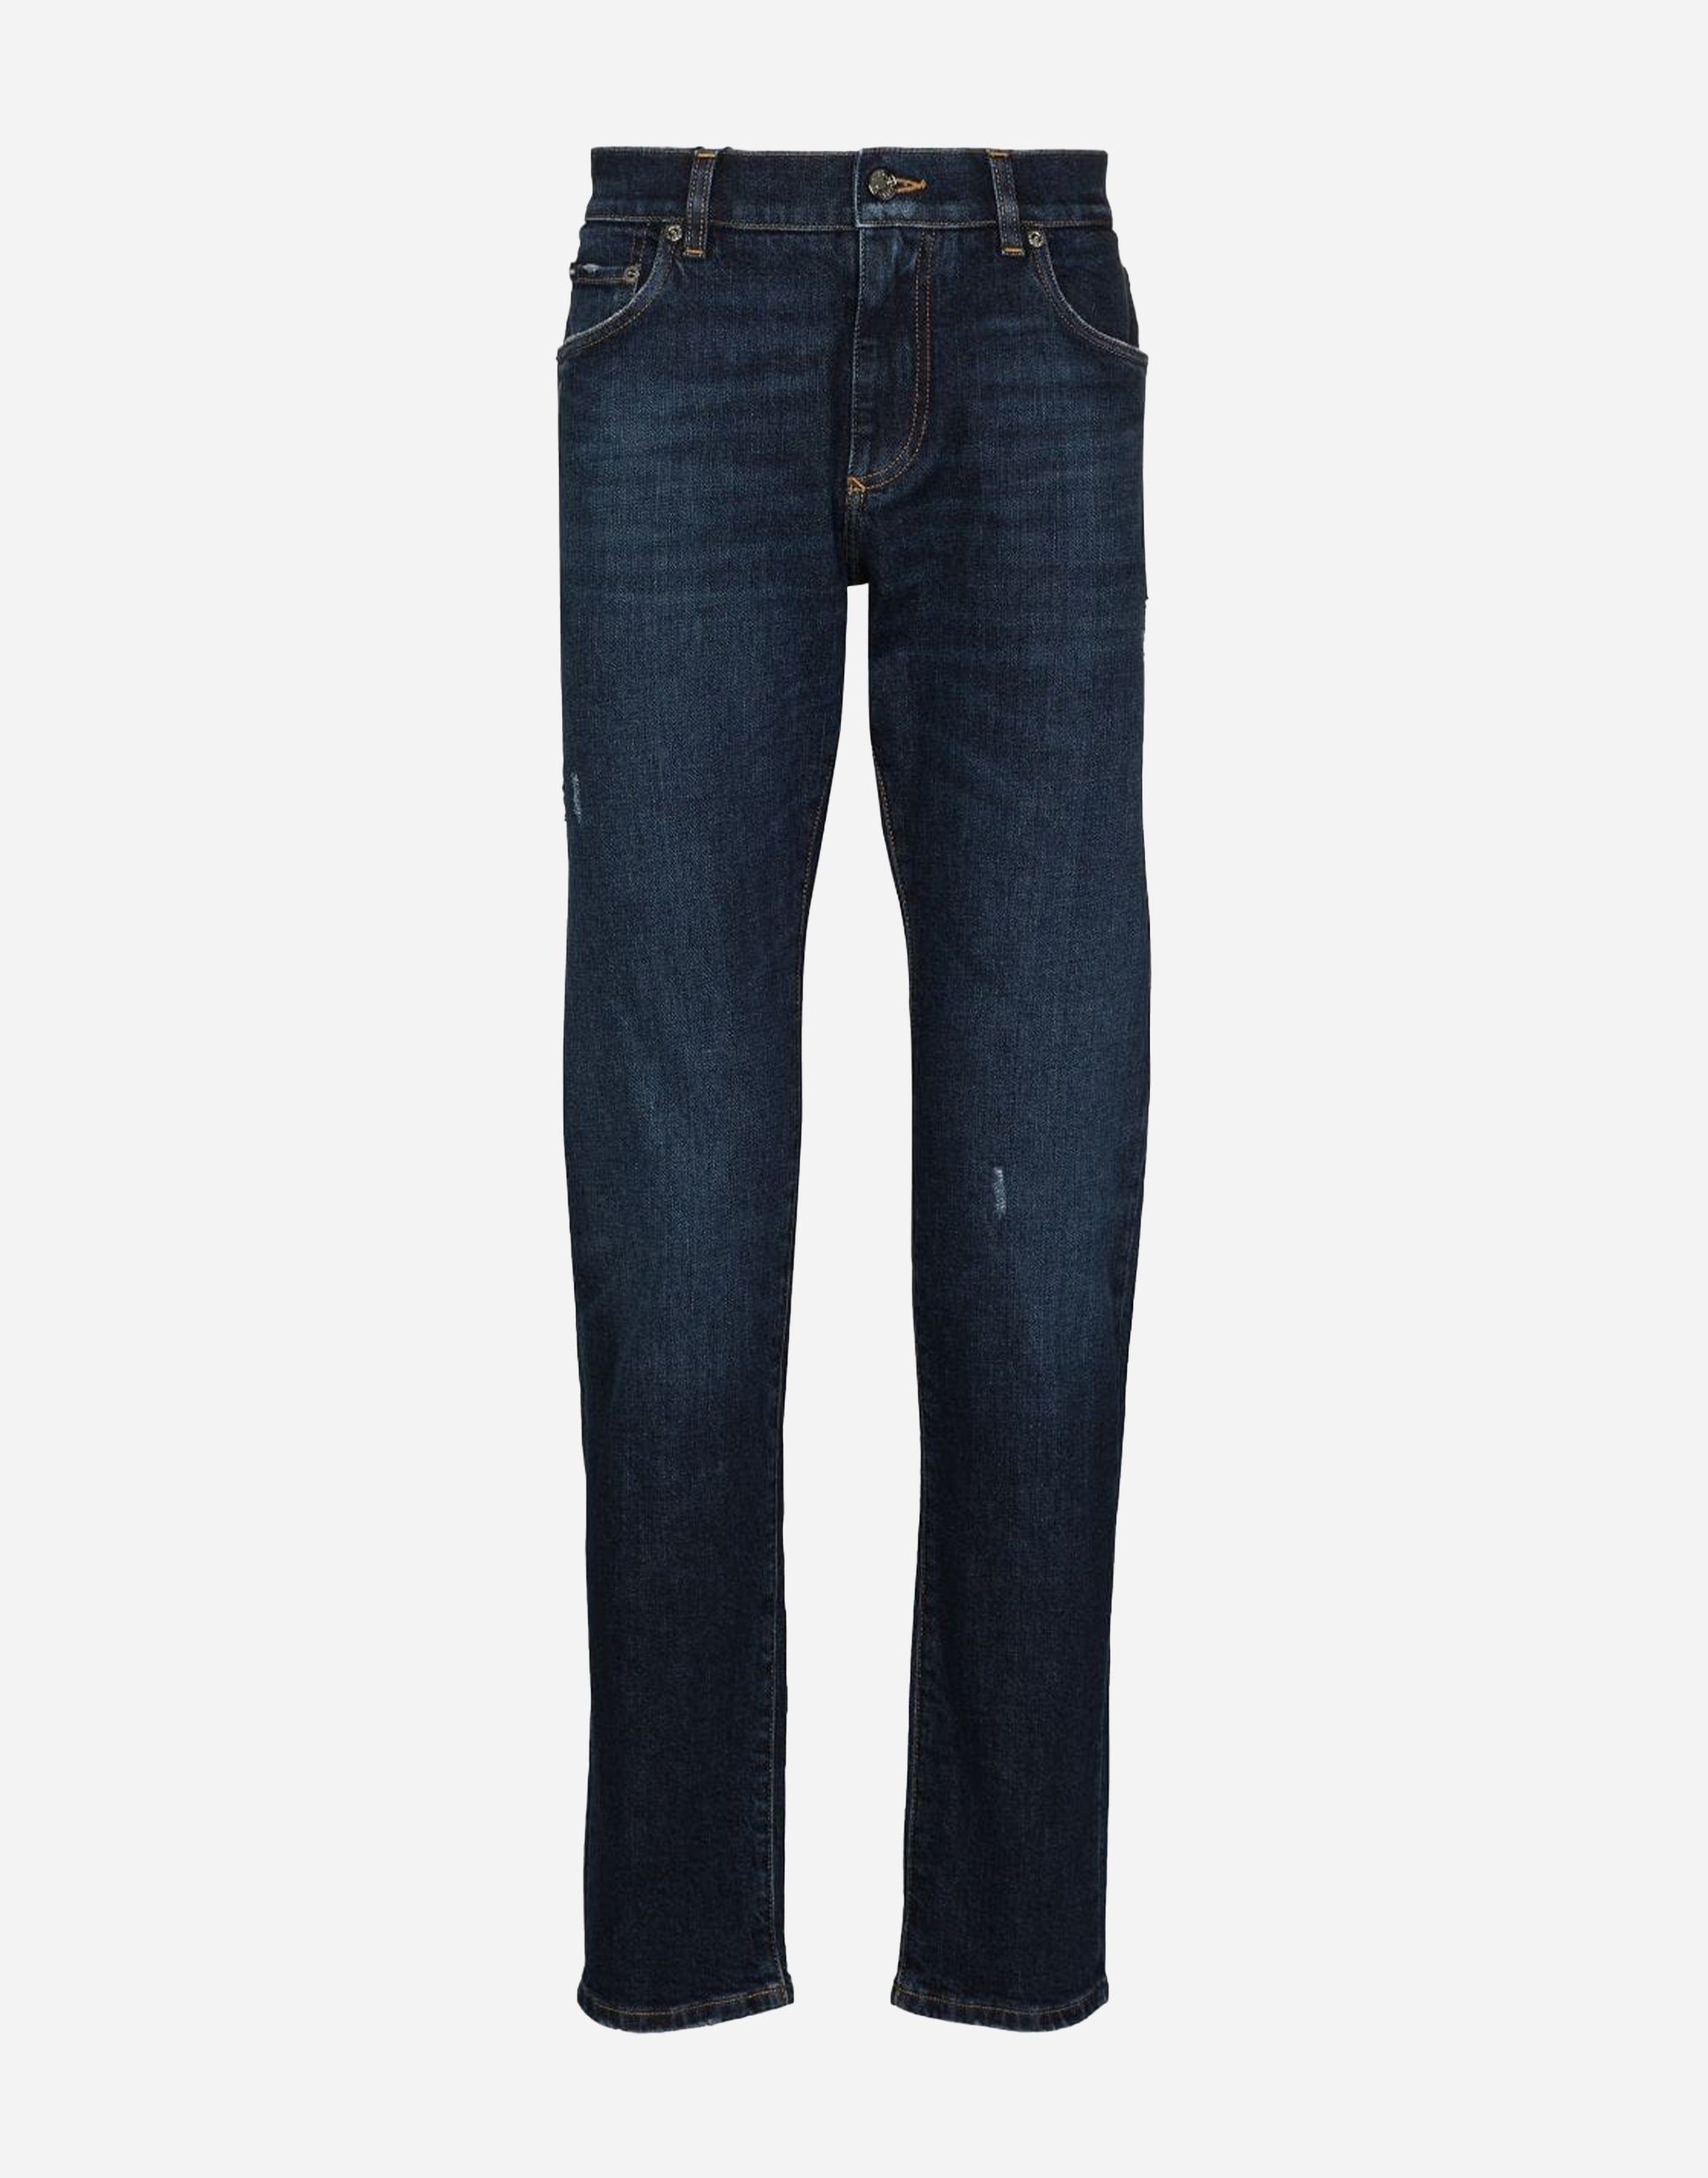 Dolce & Gabbana Wash Slim-Fit Stretch Jeans